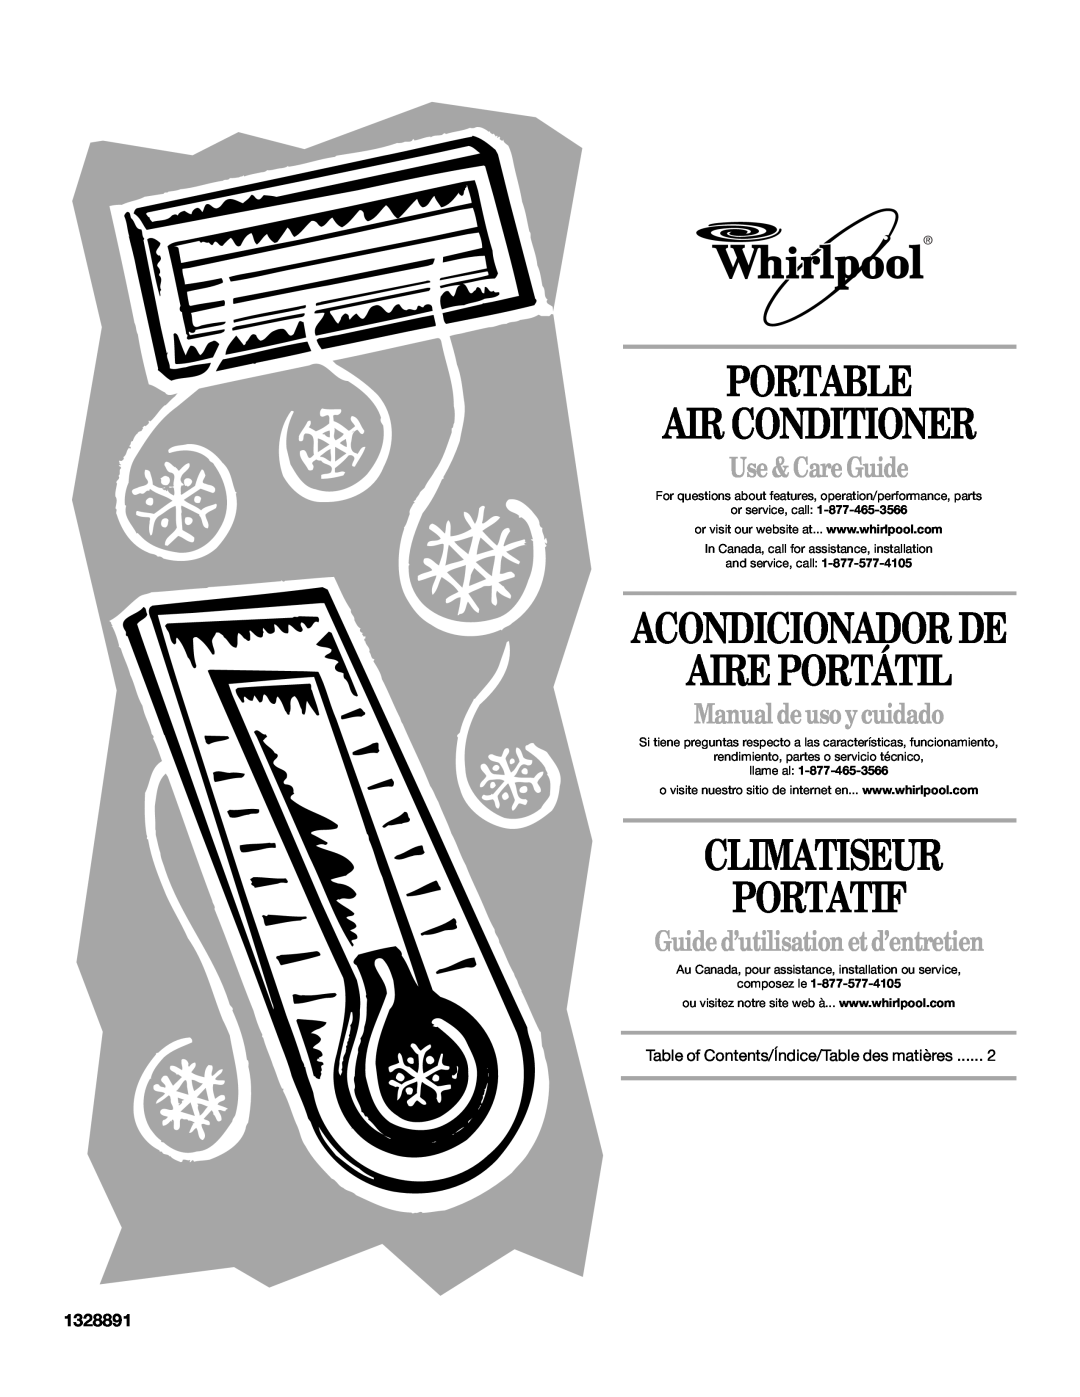 Whirlpool 1328891 manual Portable Air Conditioner, Acondicionador De Aire Portátil, Climatiseur Portatif, Use&CareGuide 